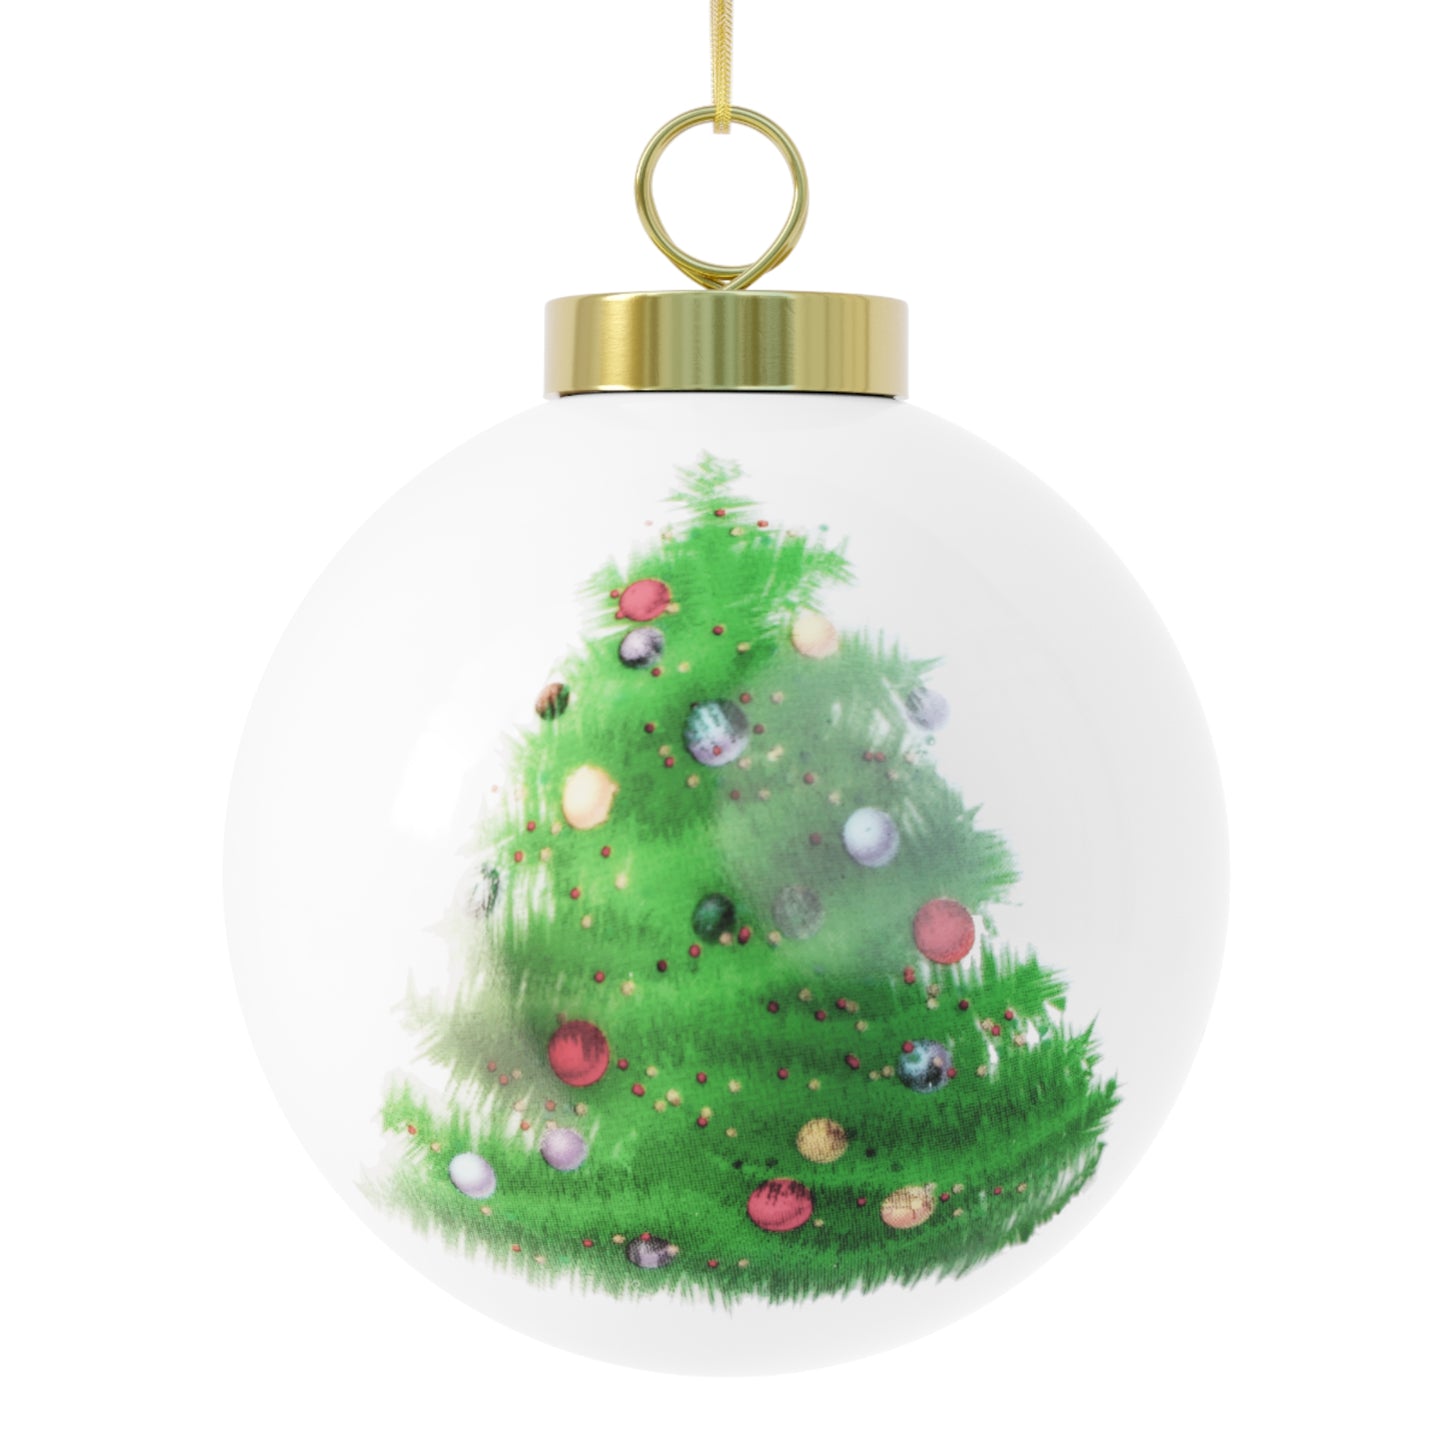 2023 Fantasy Basketball Champion Fantasy Champ Christmas Tree Ball Ornament